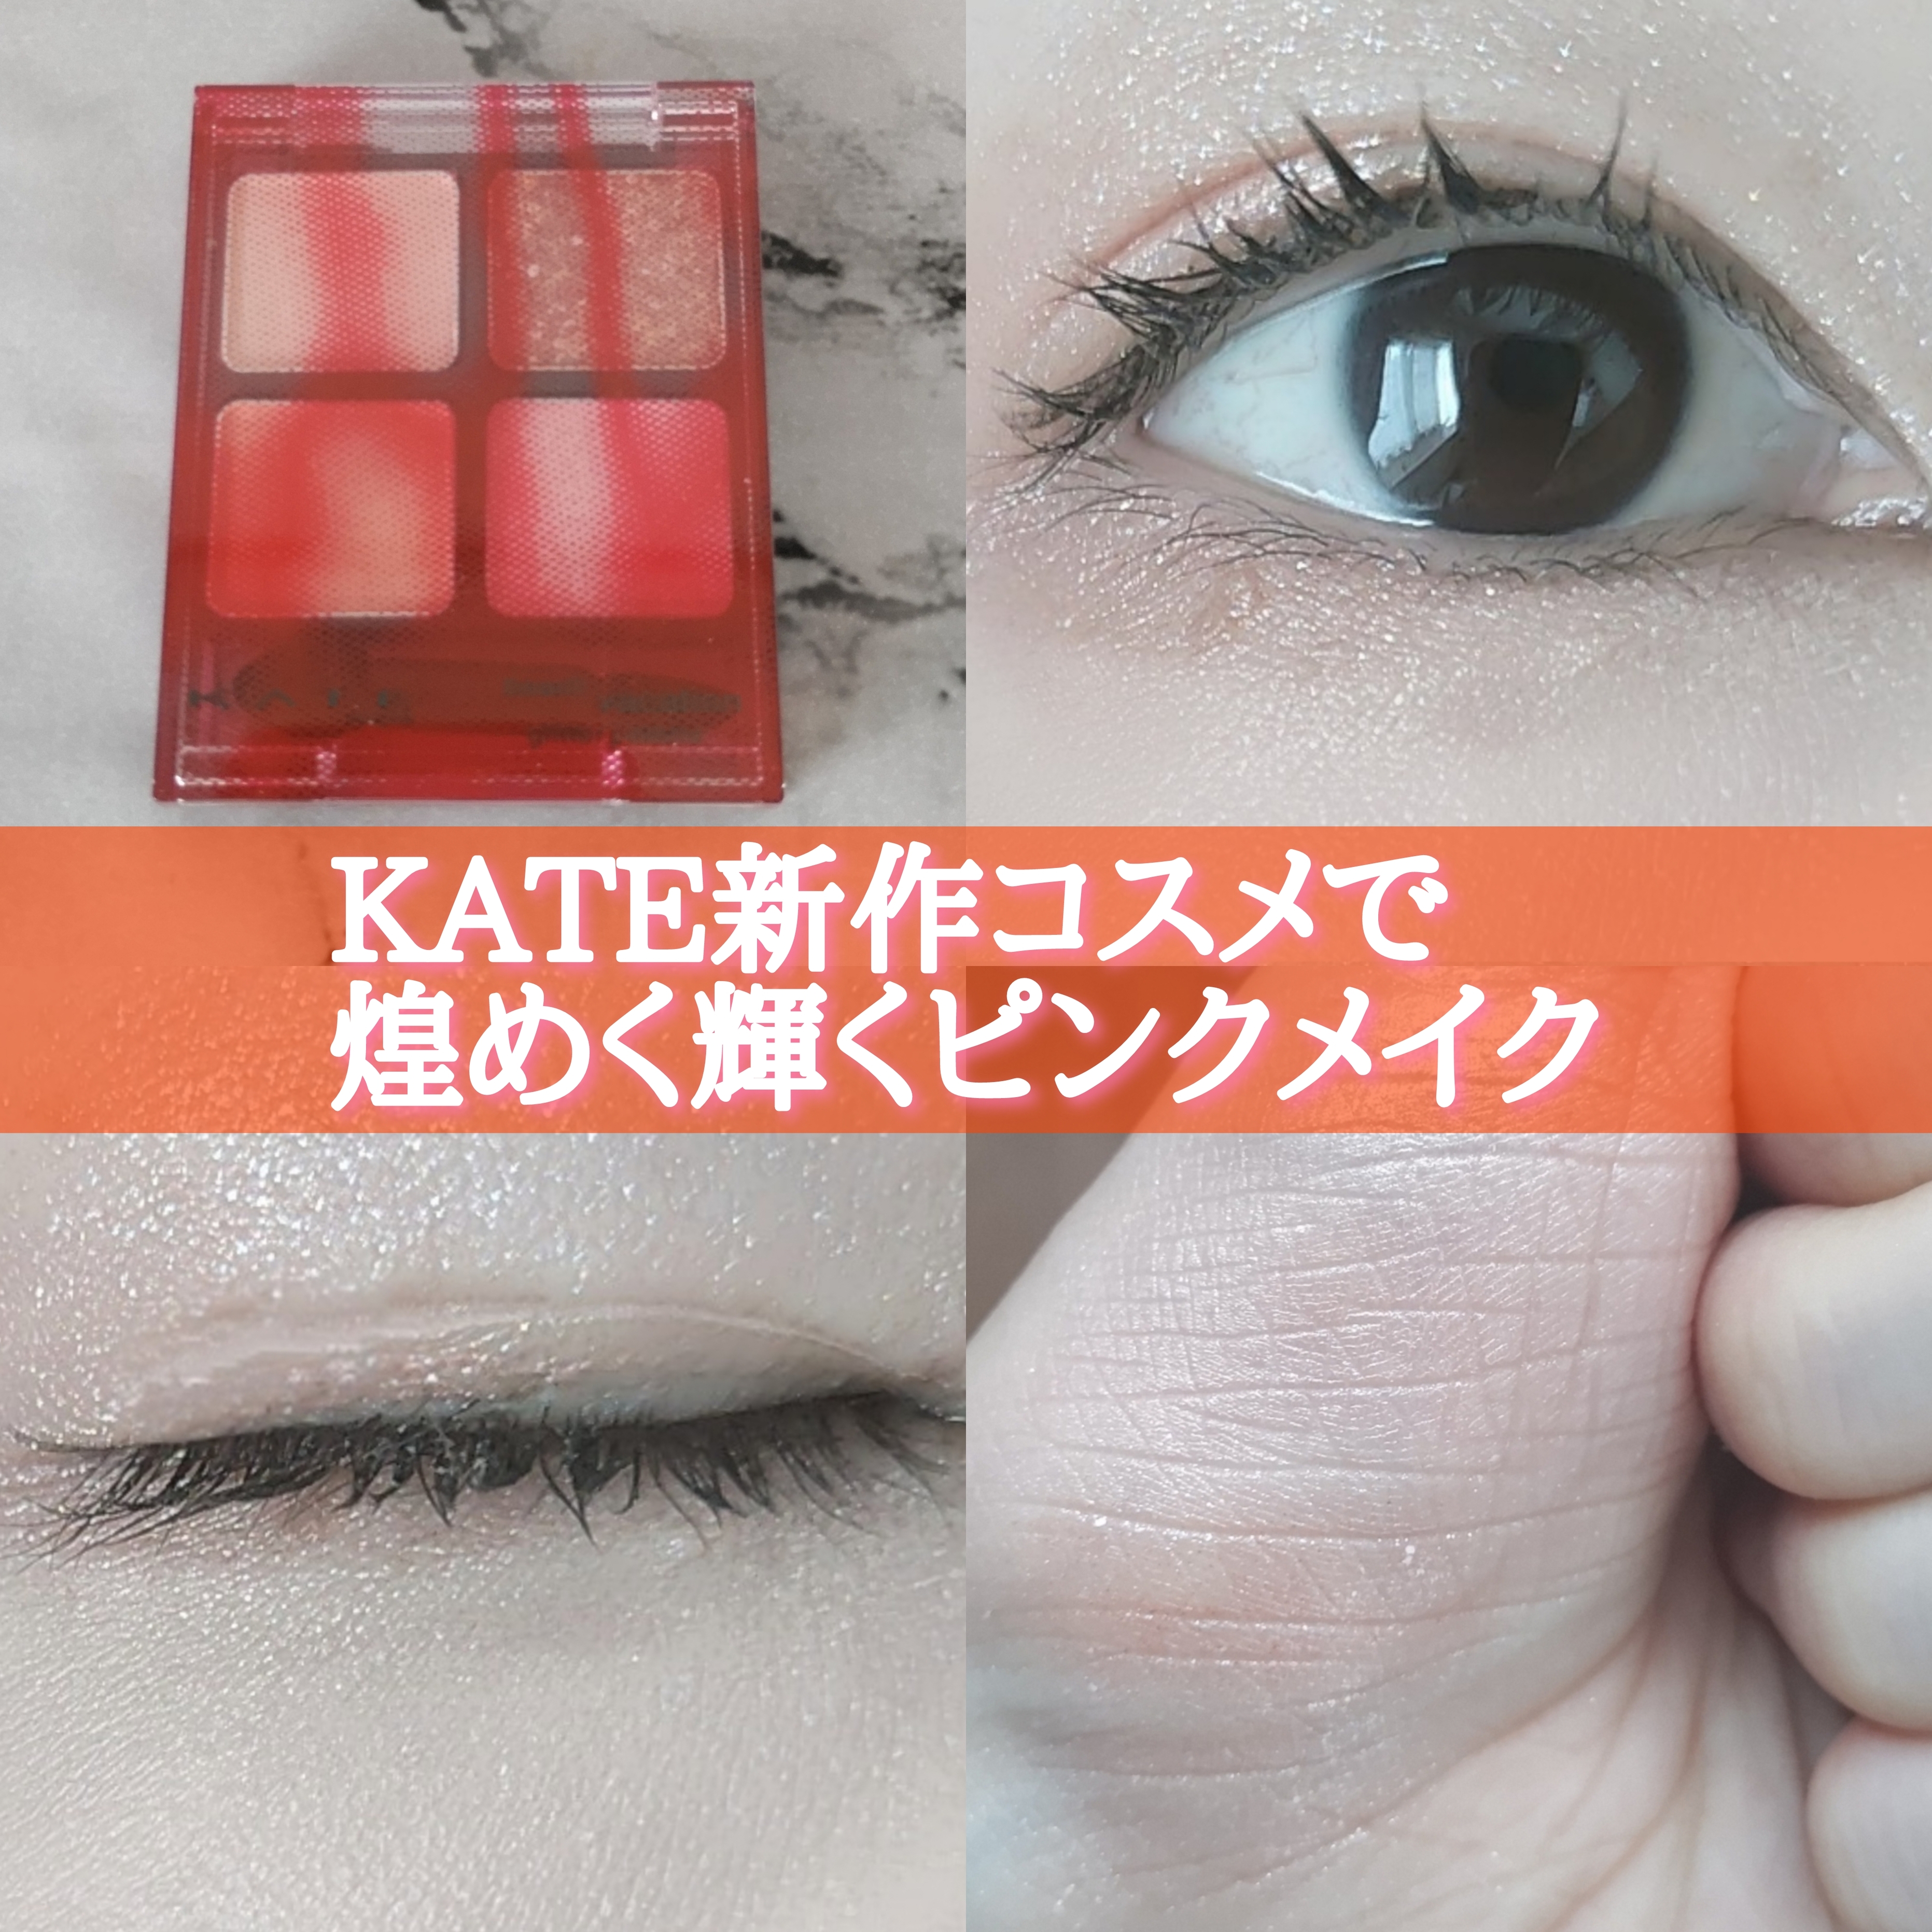 KATE ビーチバカンスグリッターパレットを使ったYuKaRi♡さんのクチコミ画像1